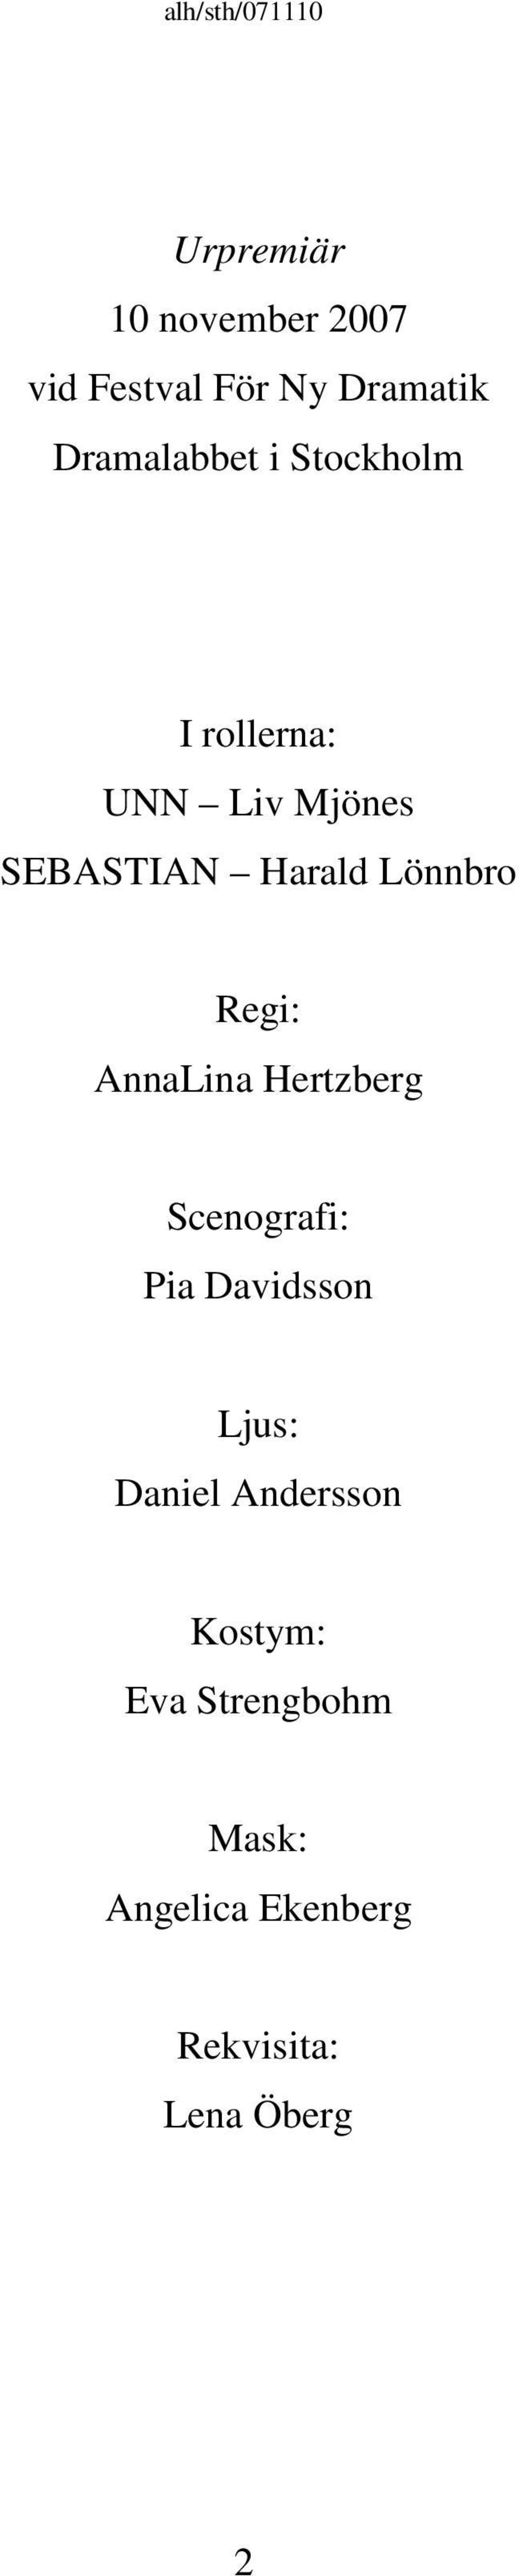 AnnaLina Hertzberg Scenografi: Pia Davidsson Ljus: Daniel Andersson